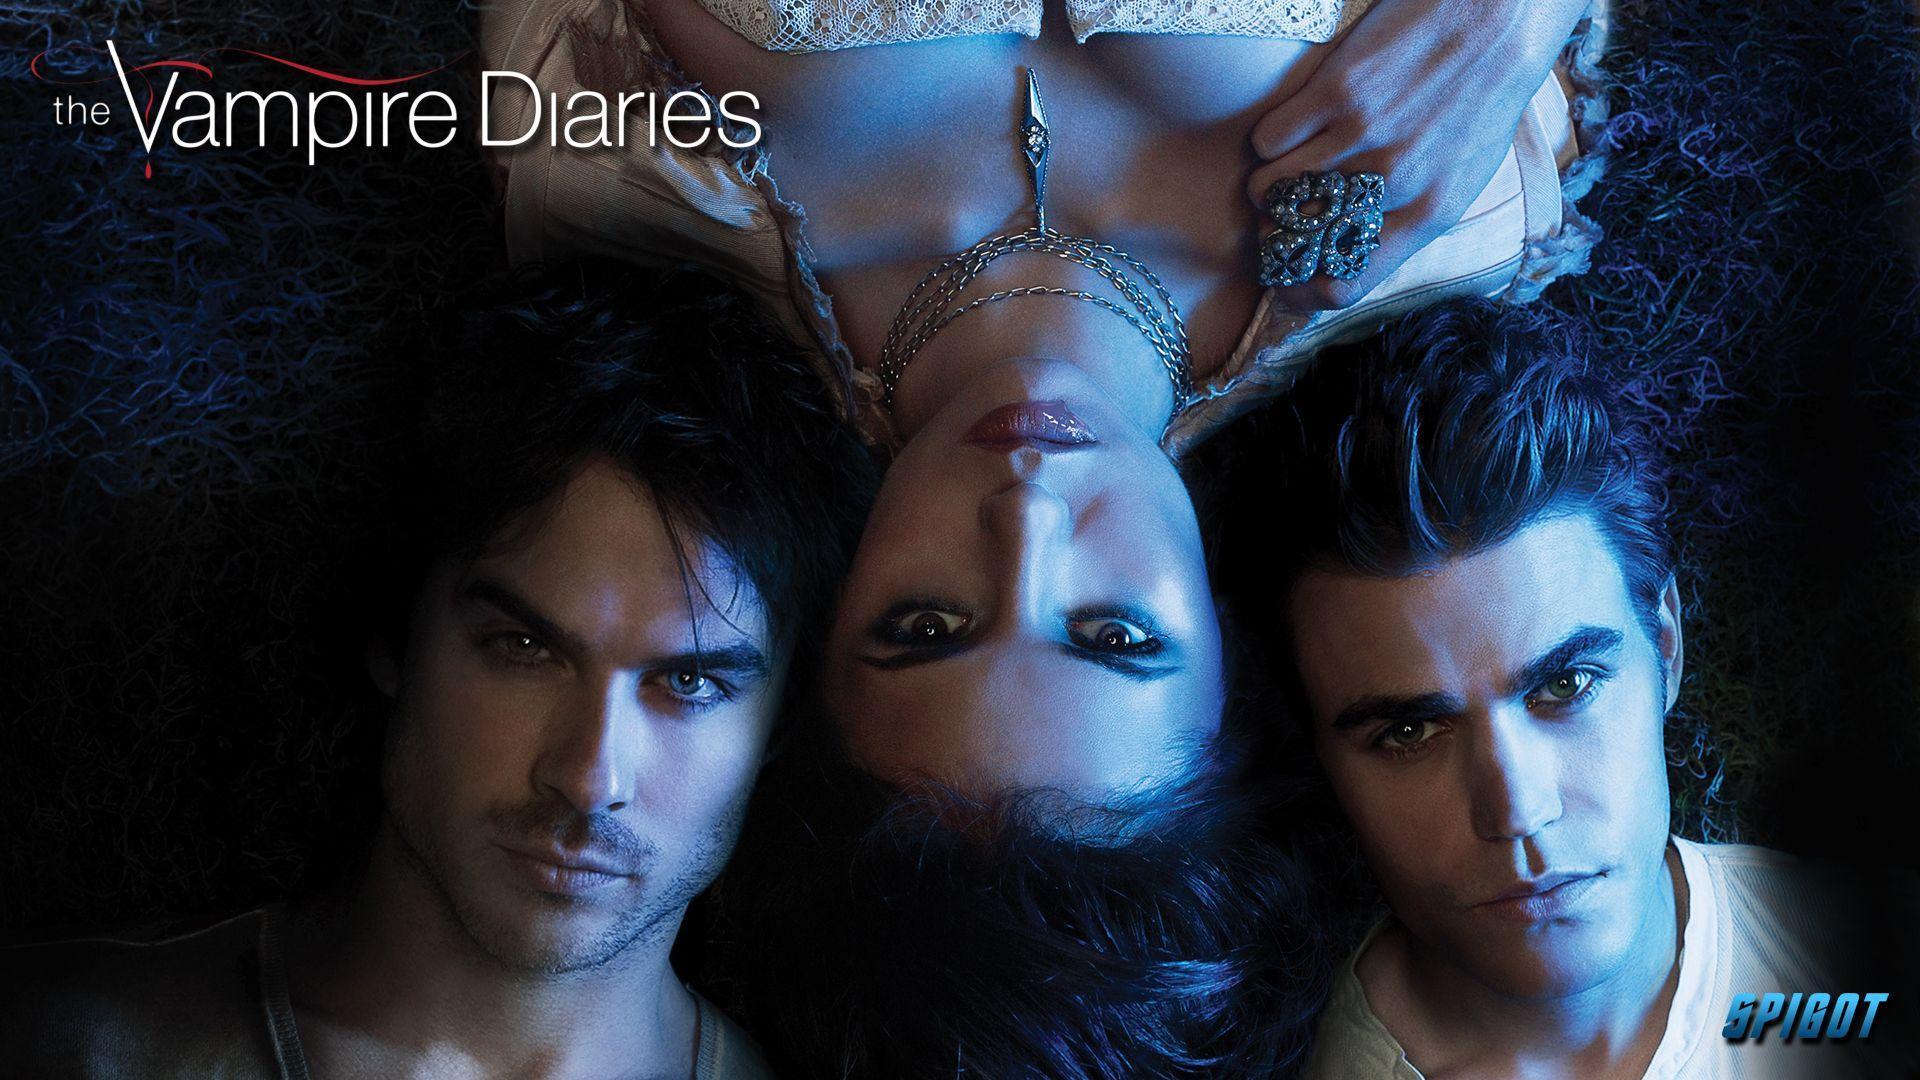 The Last Of The Vampire Diaries Wallpaper. George Spigot's Blog